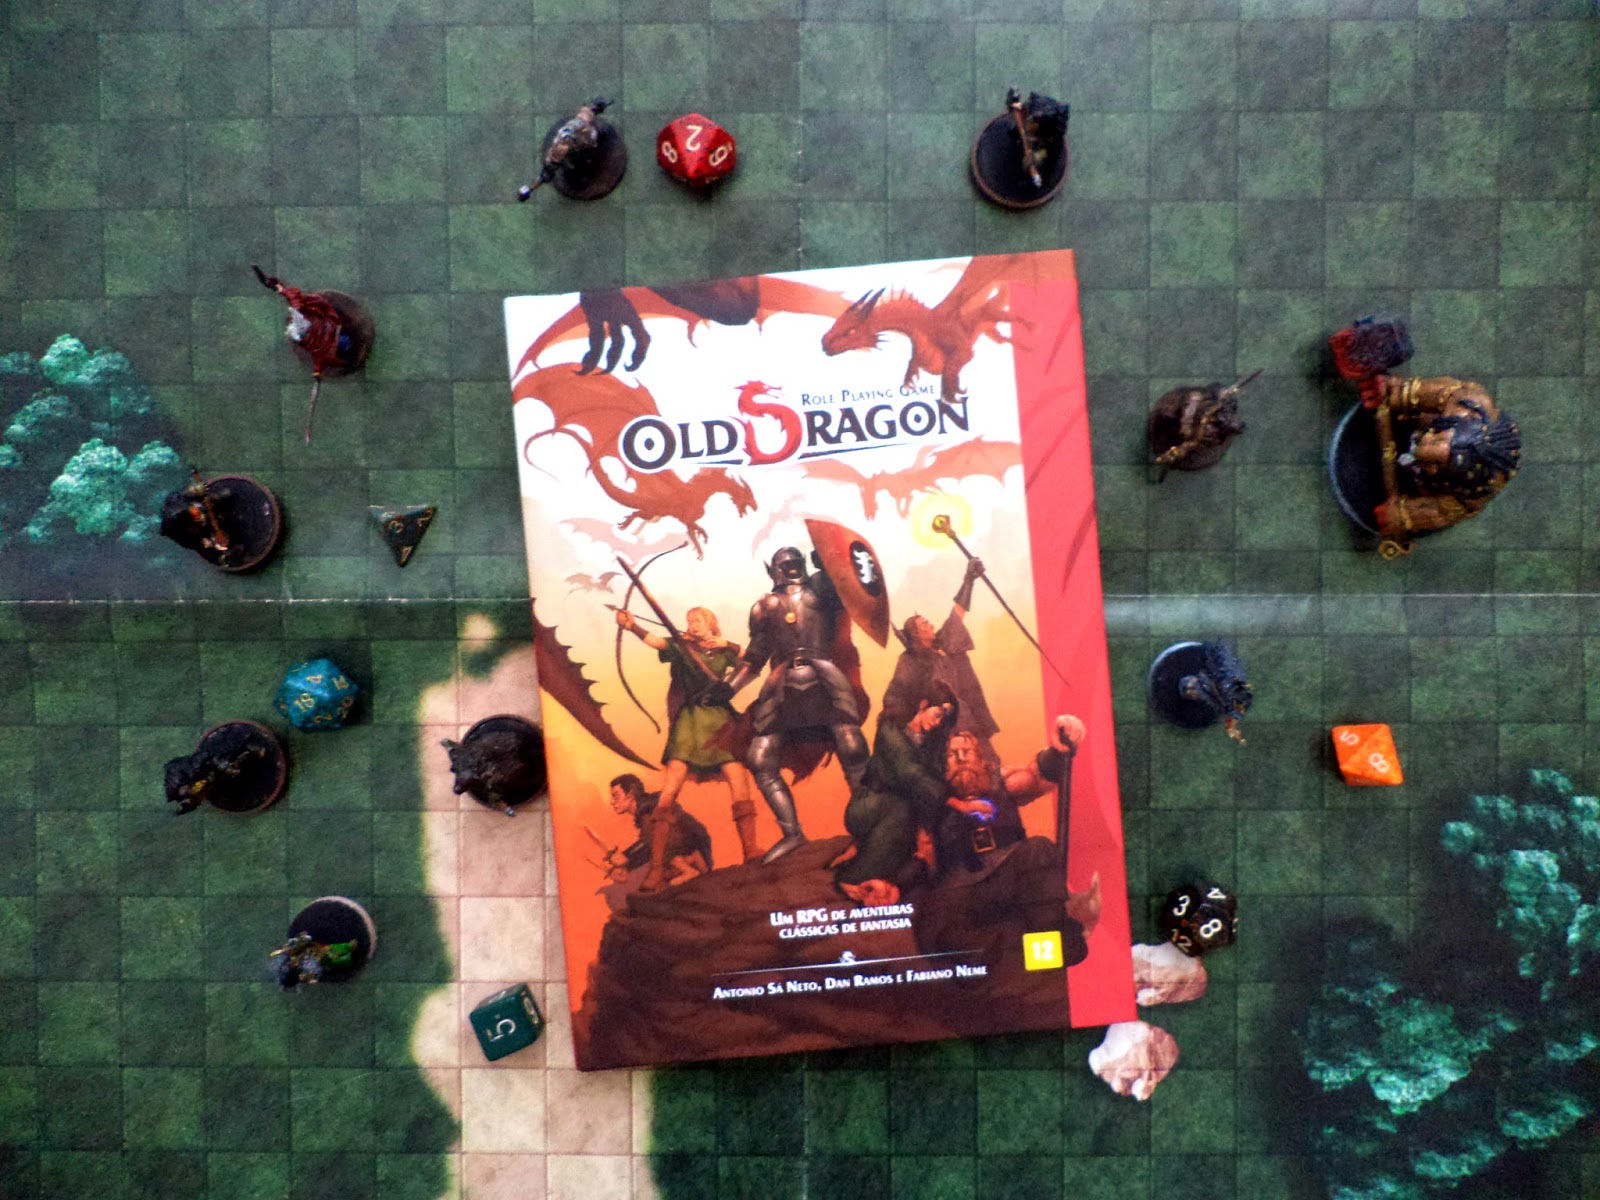 Dungeons & Dragons Adventure Begins: jogo de tabuleiro cooperativo de D&D!  - RedeRPG